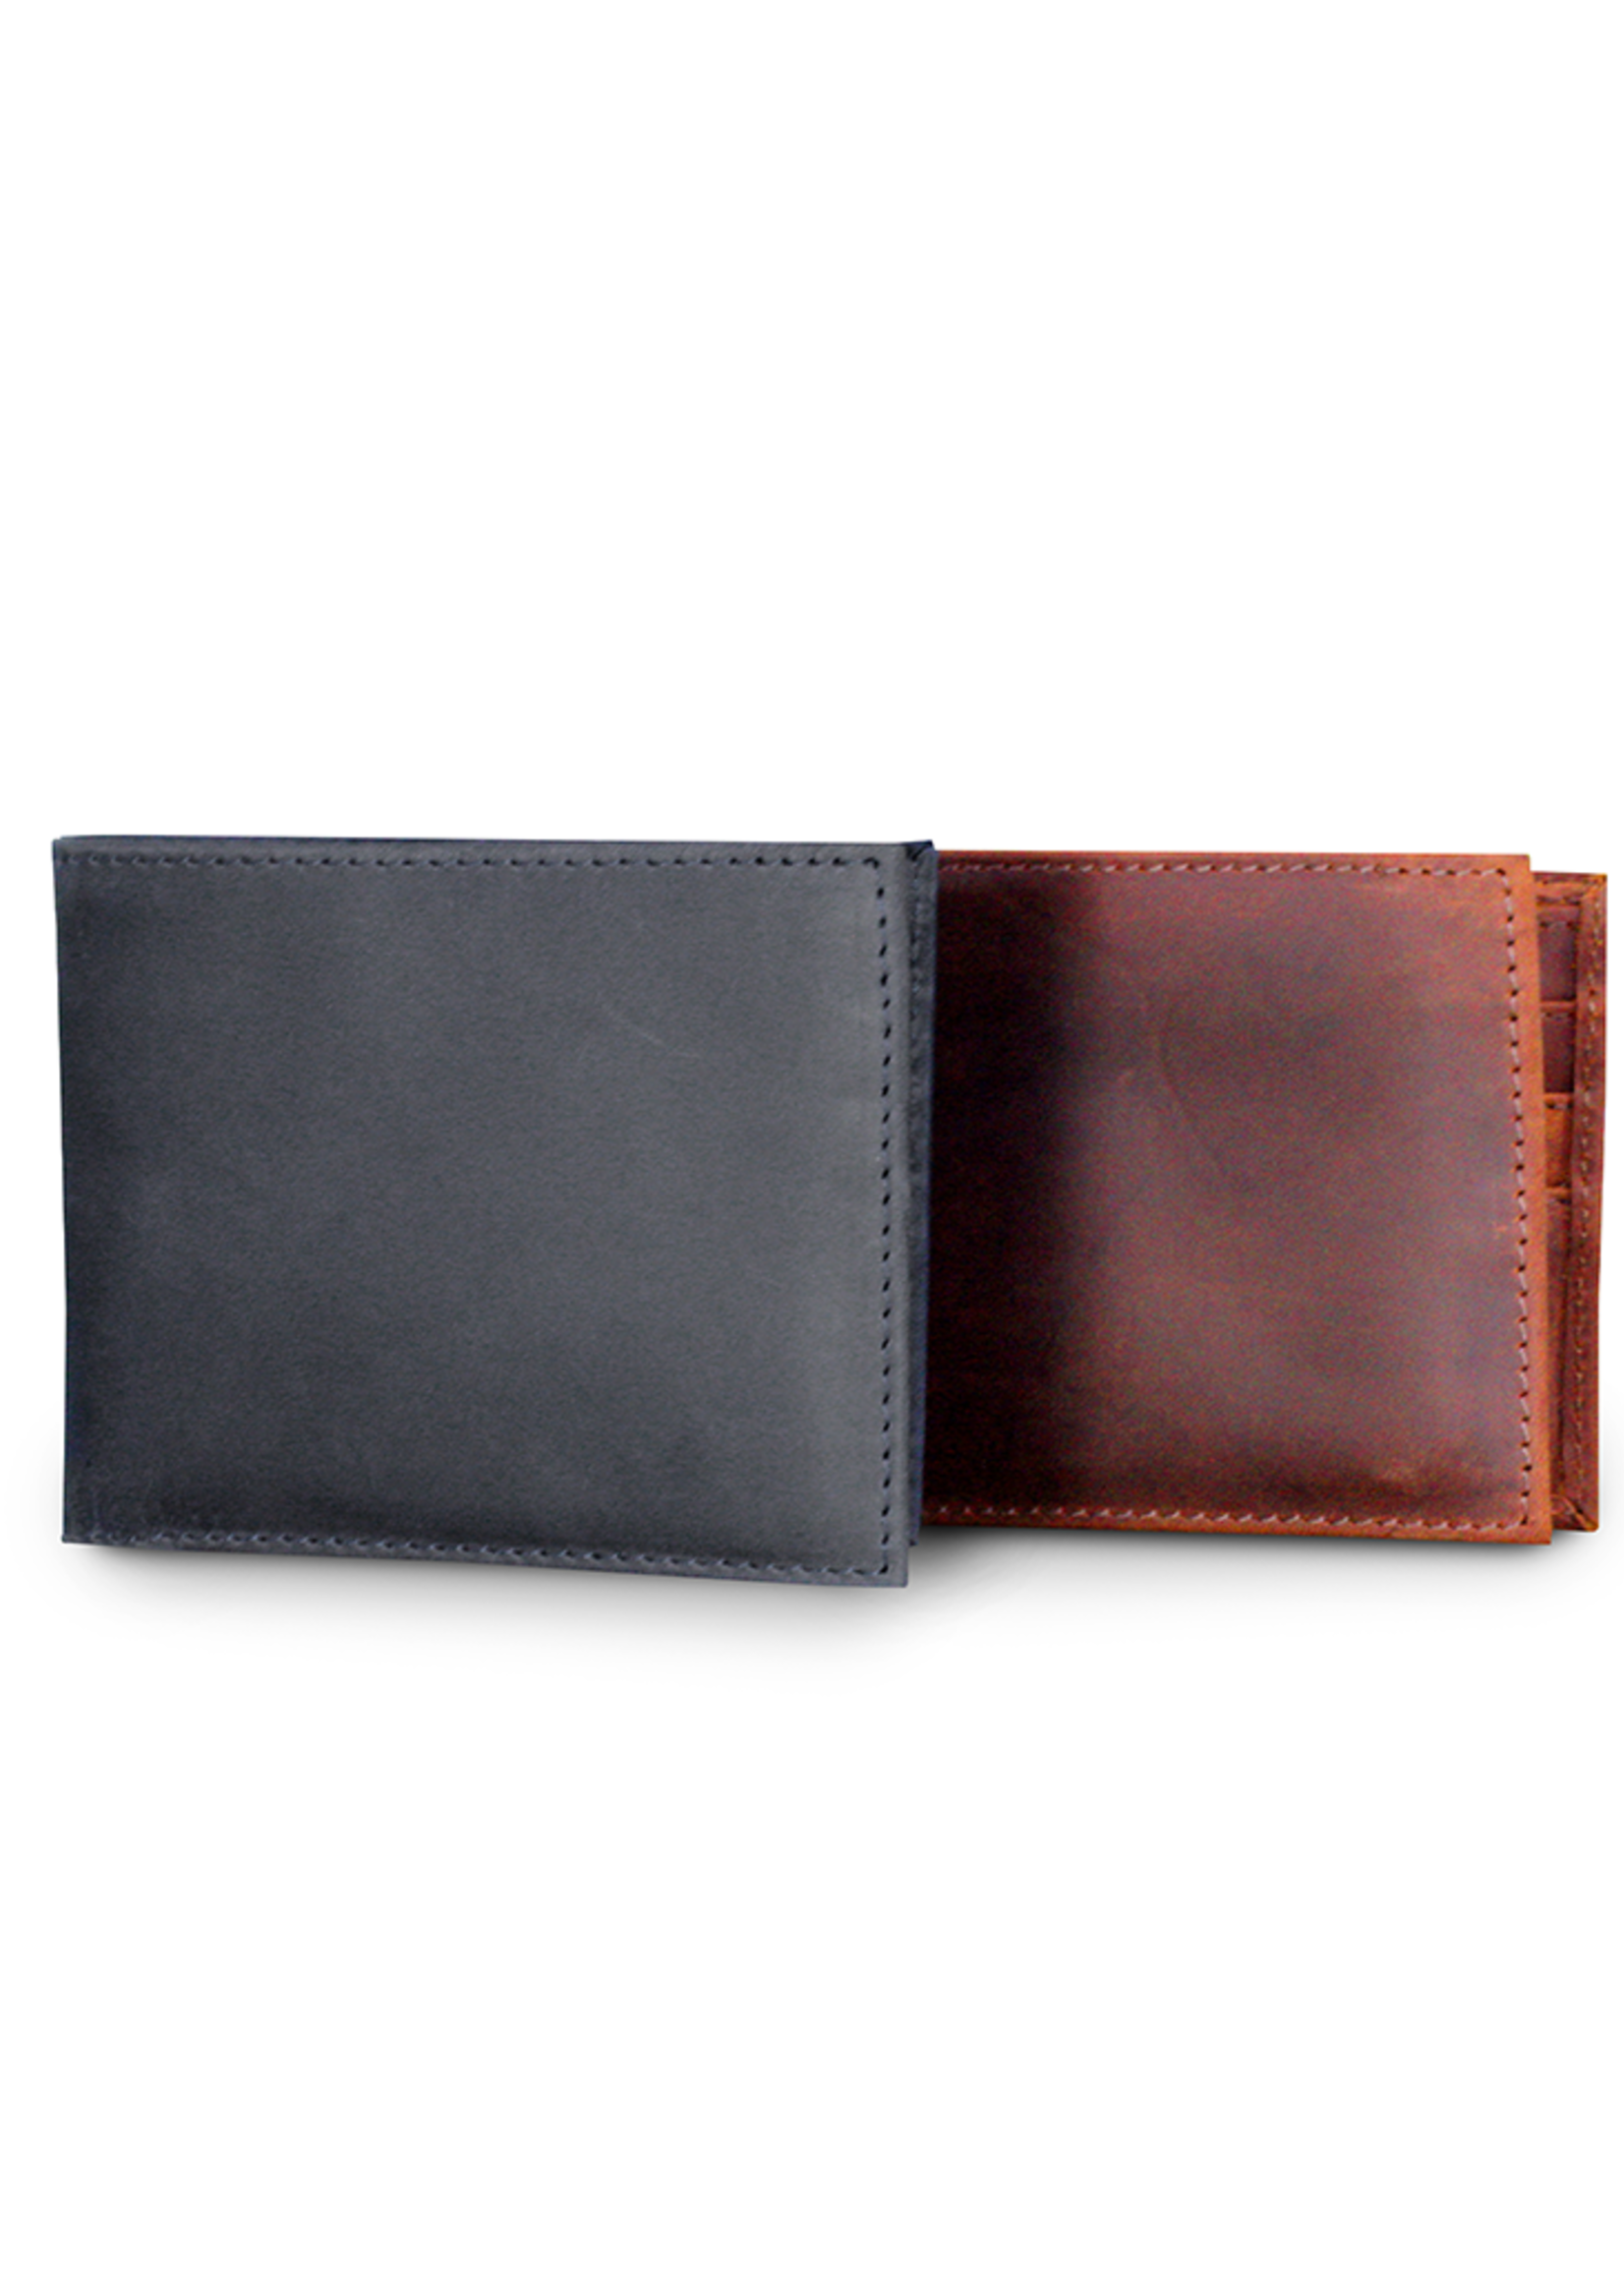 Leather Bi-Fold Wallet - Electric Black